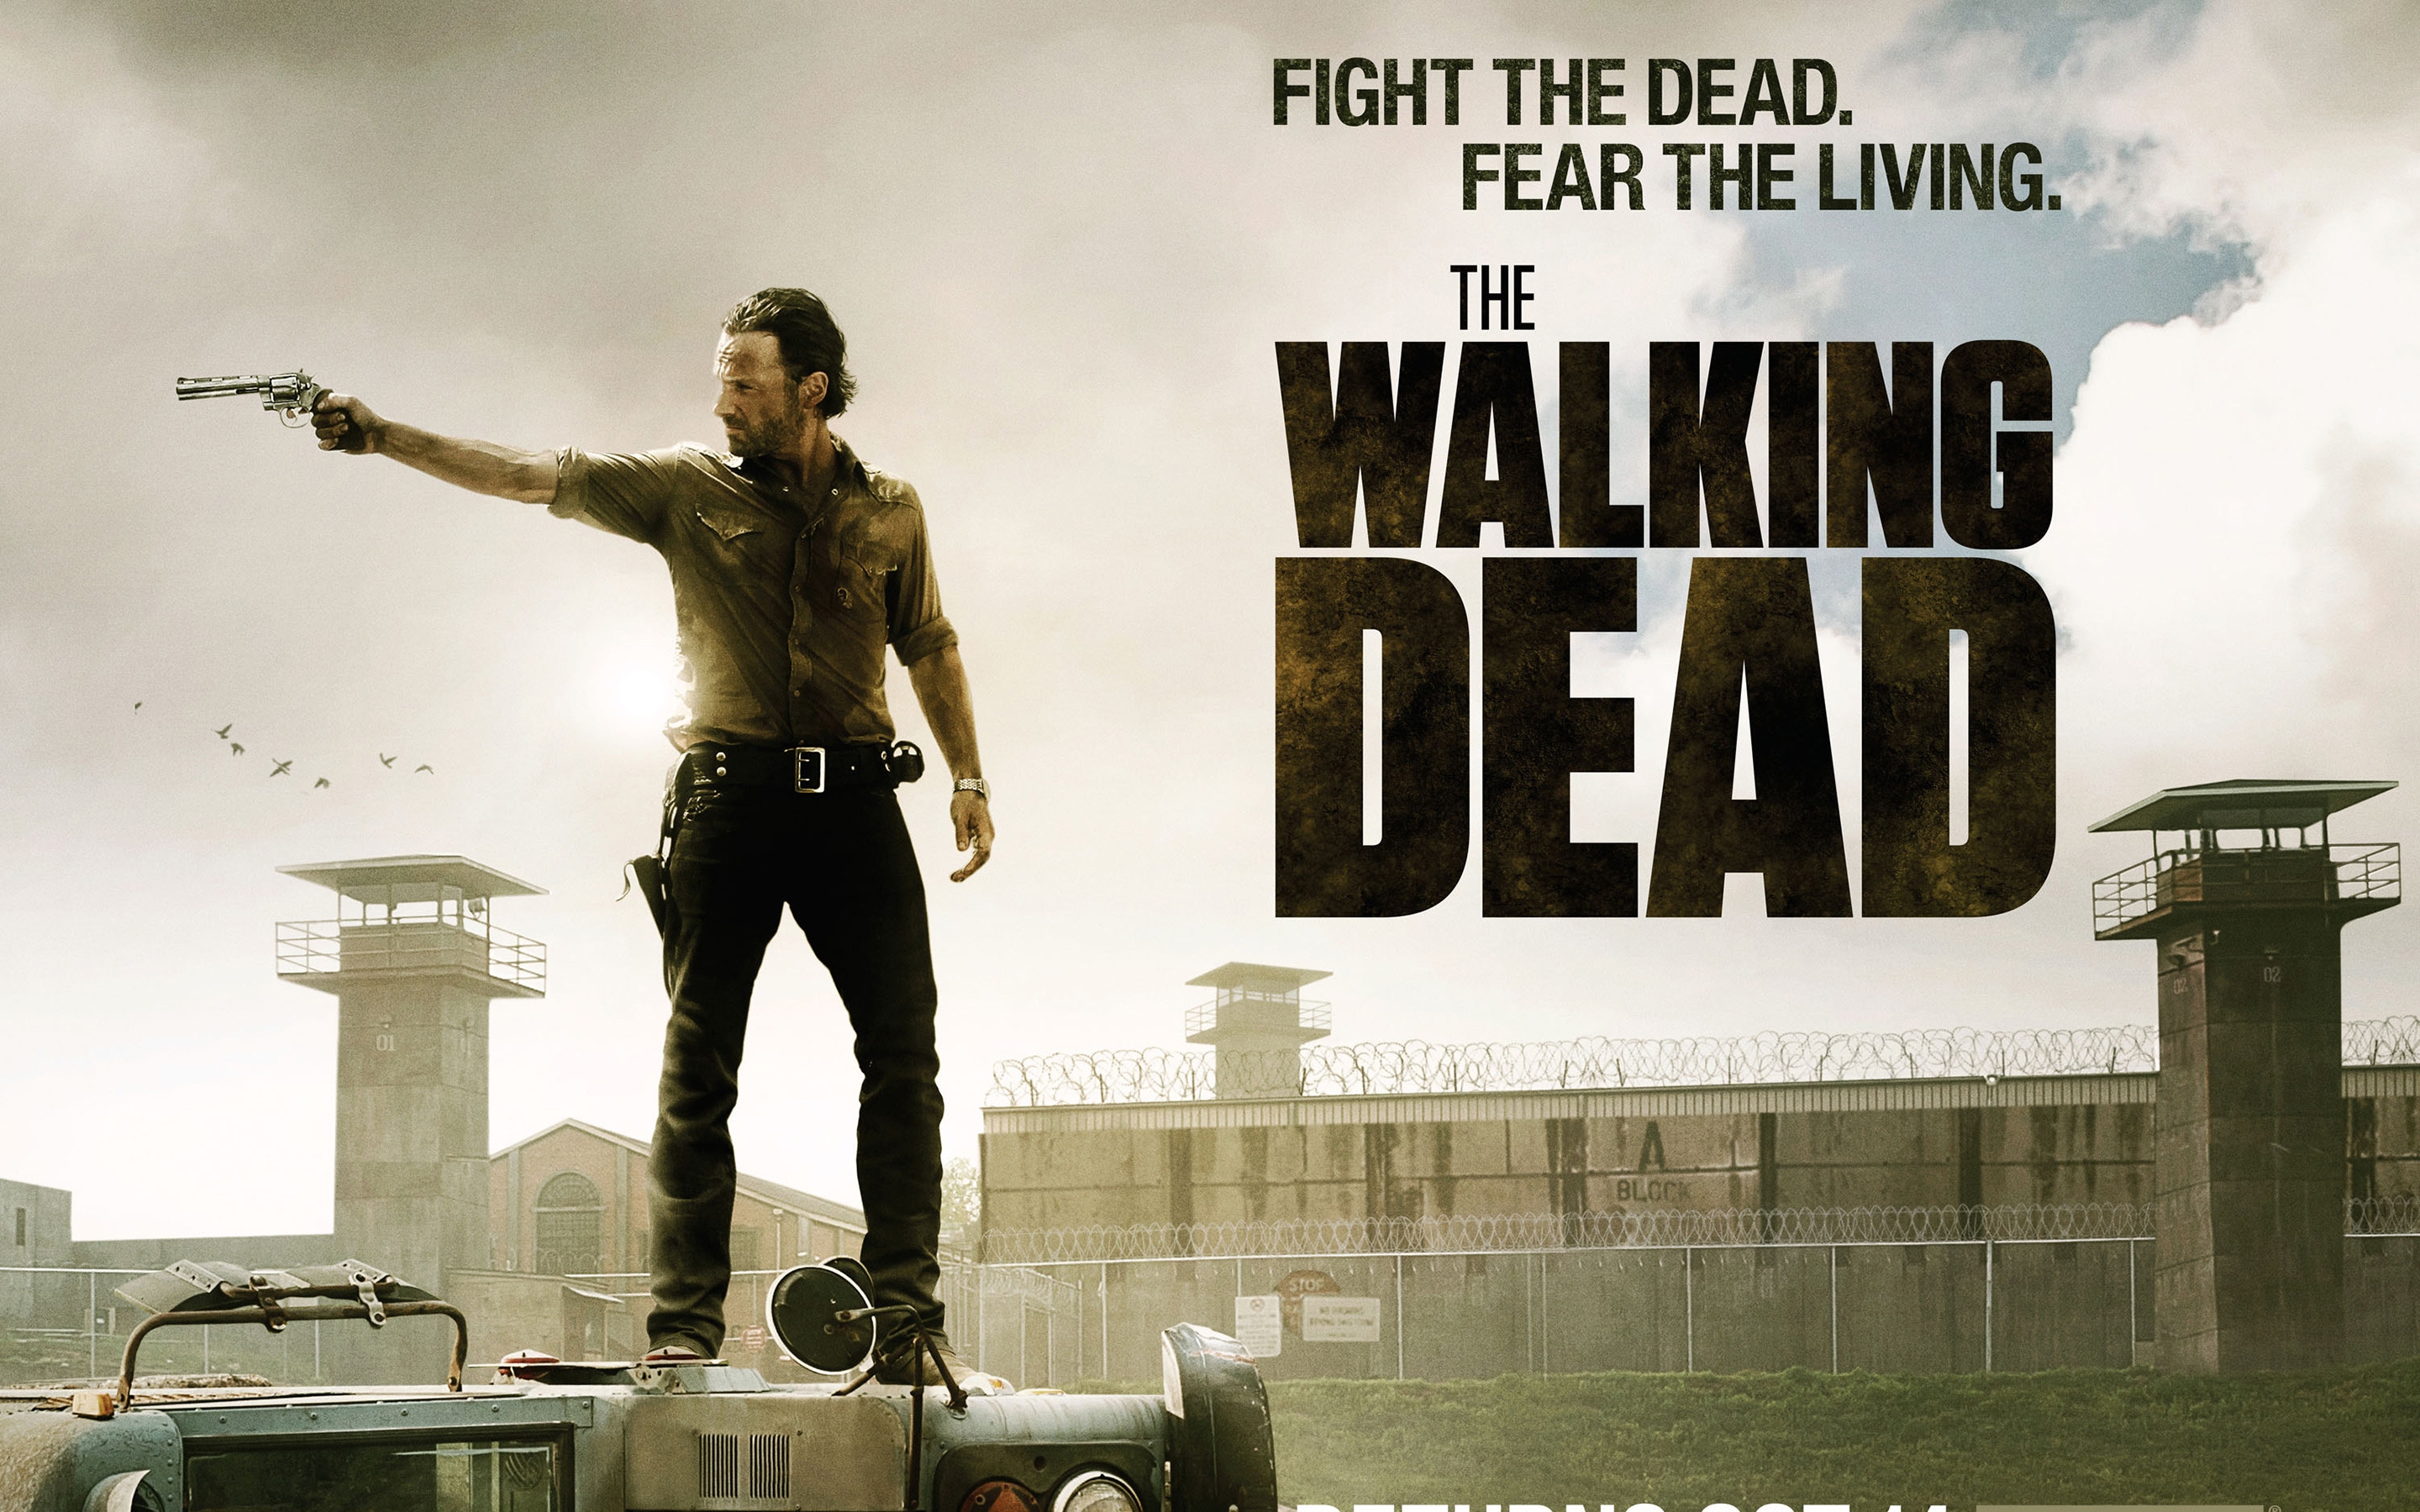 The Walking Dead Season 4 for 2880 x 1800 Retina Display resolution